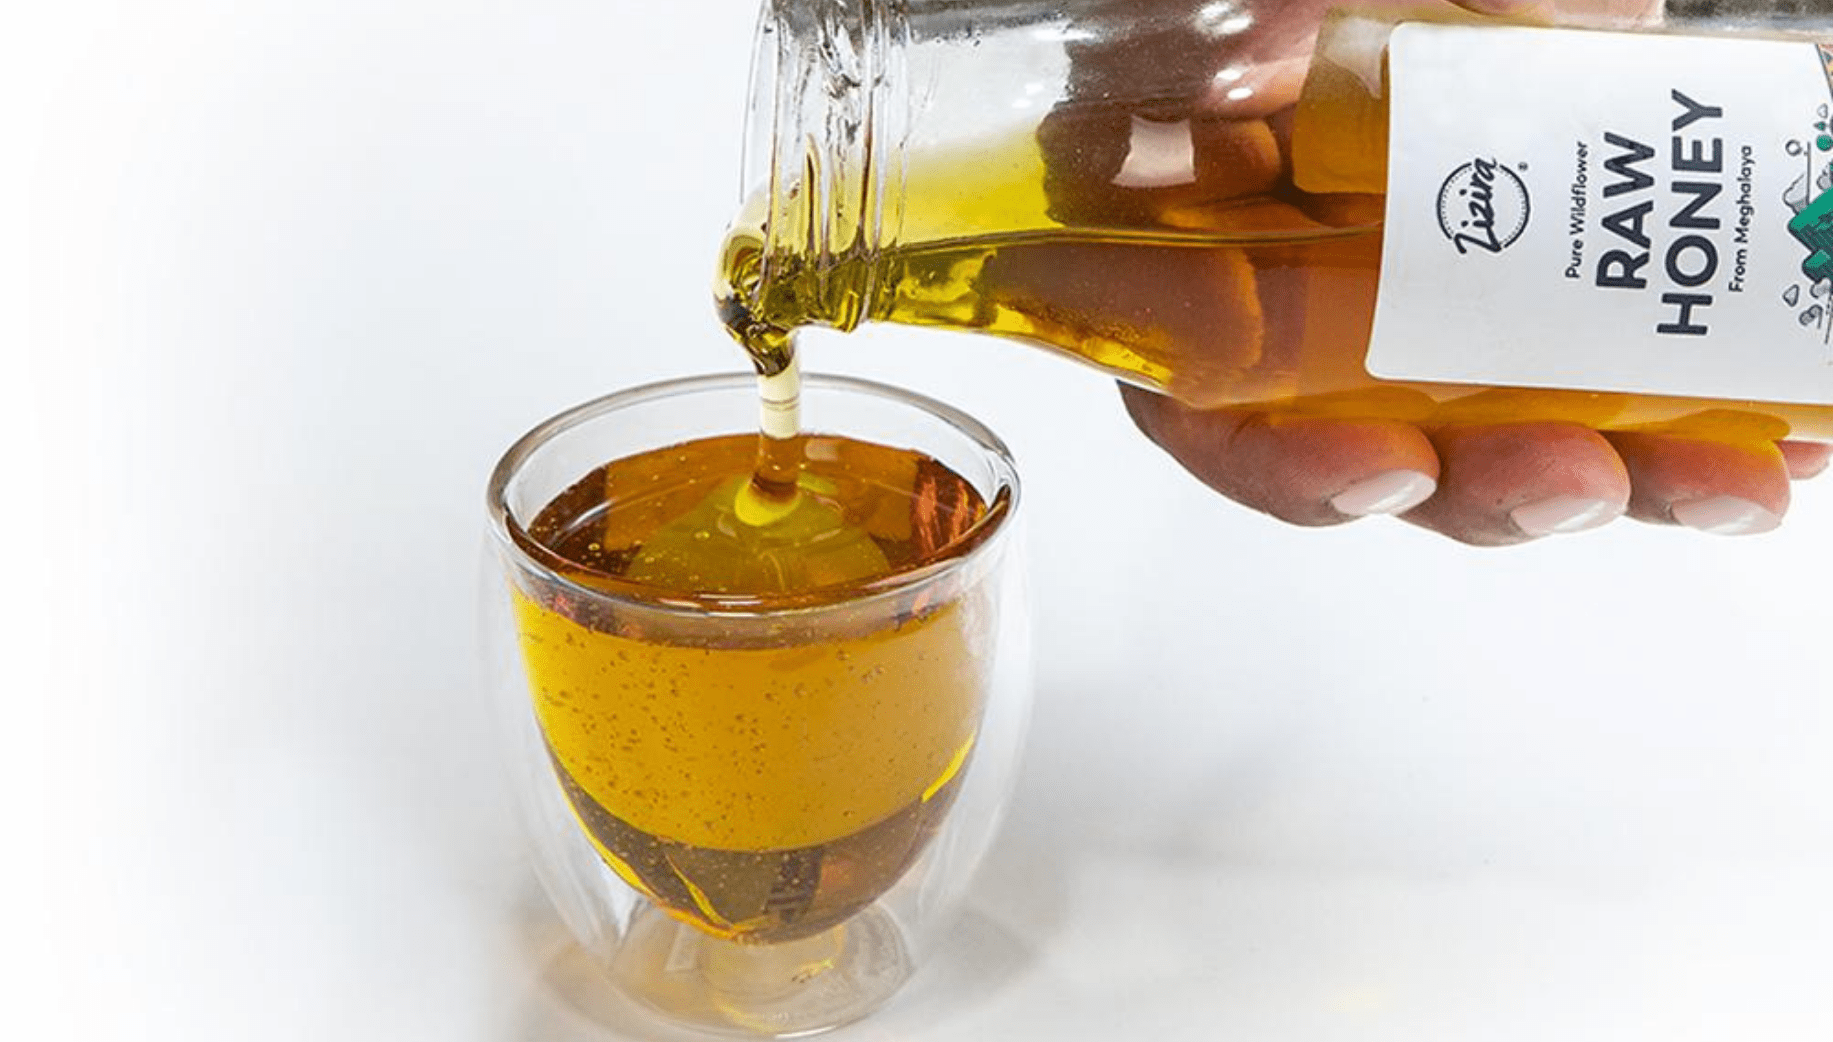 Zizira Raw honey sourced from Meghalaya